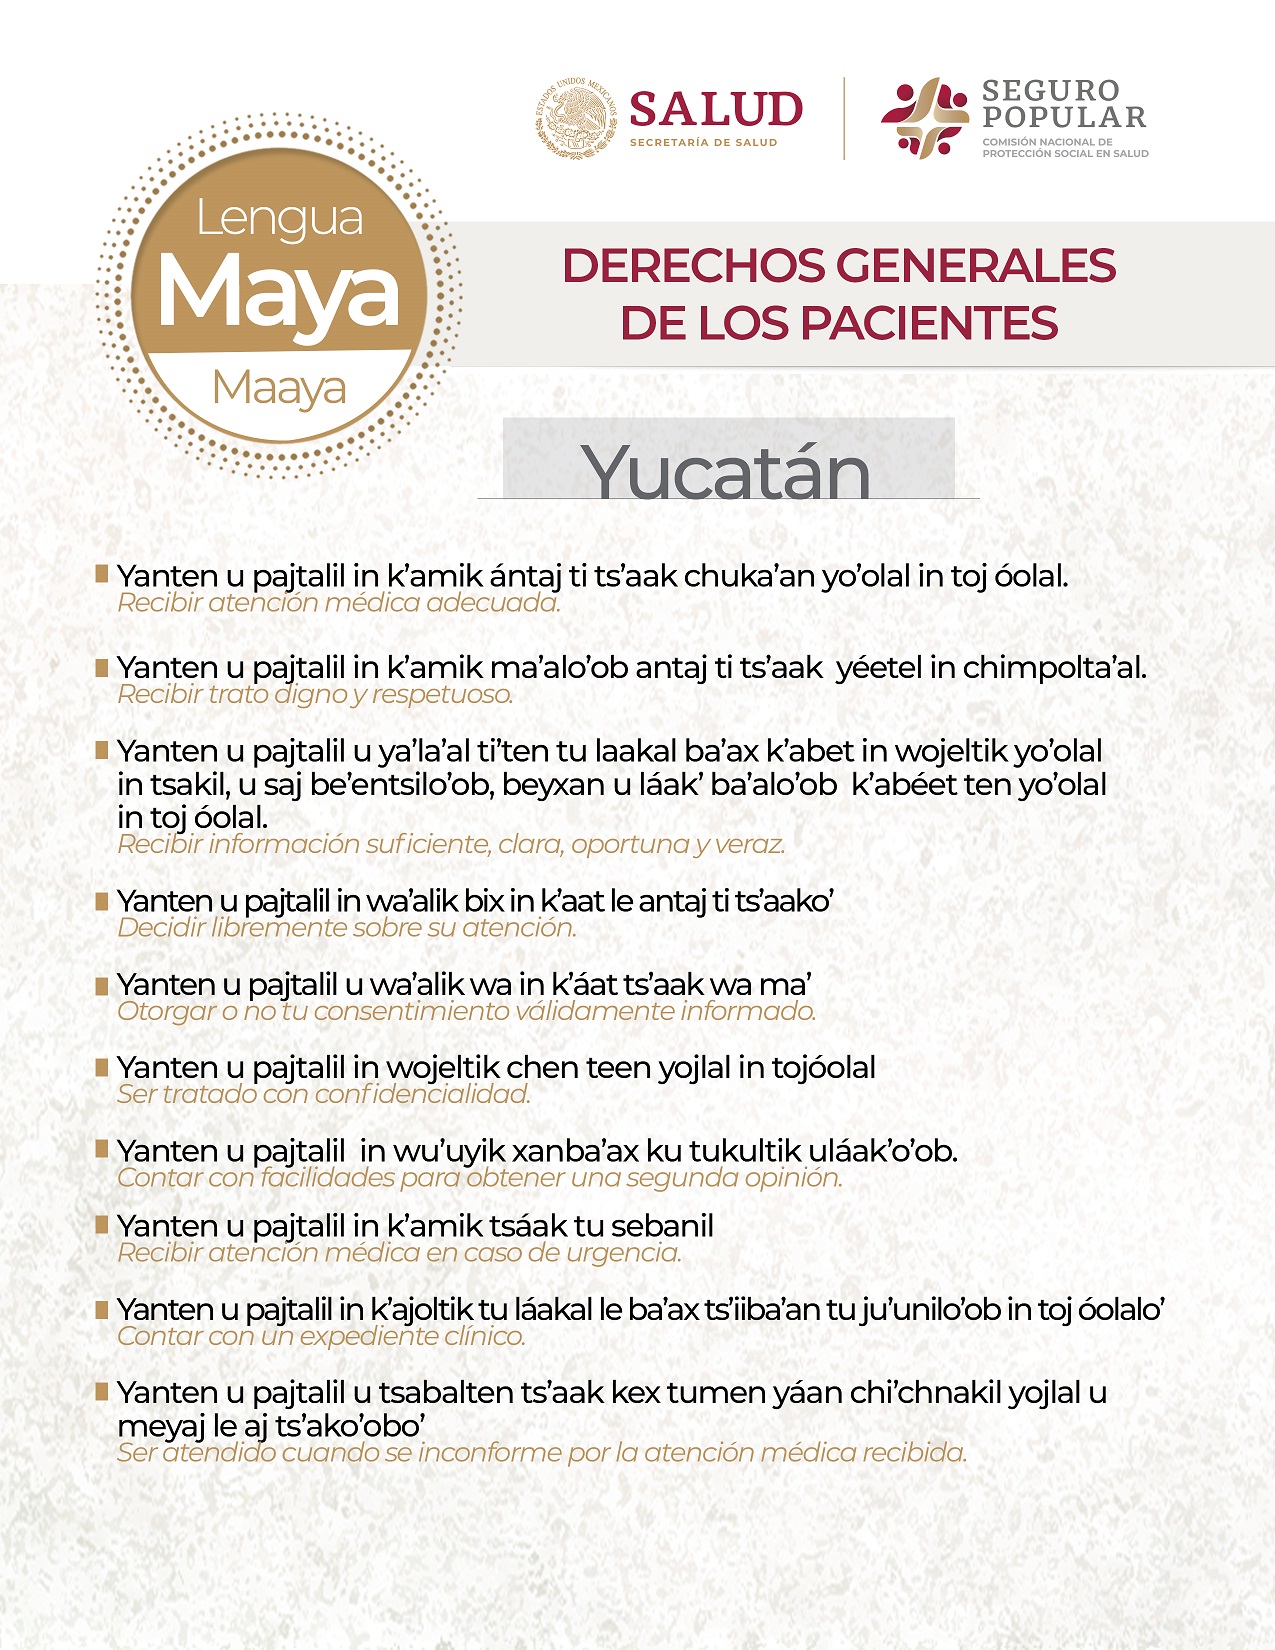 /cms/uploads/image/file/541115/Lengua-Maya-Yucat_n_traducido.jpg